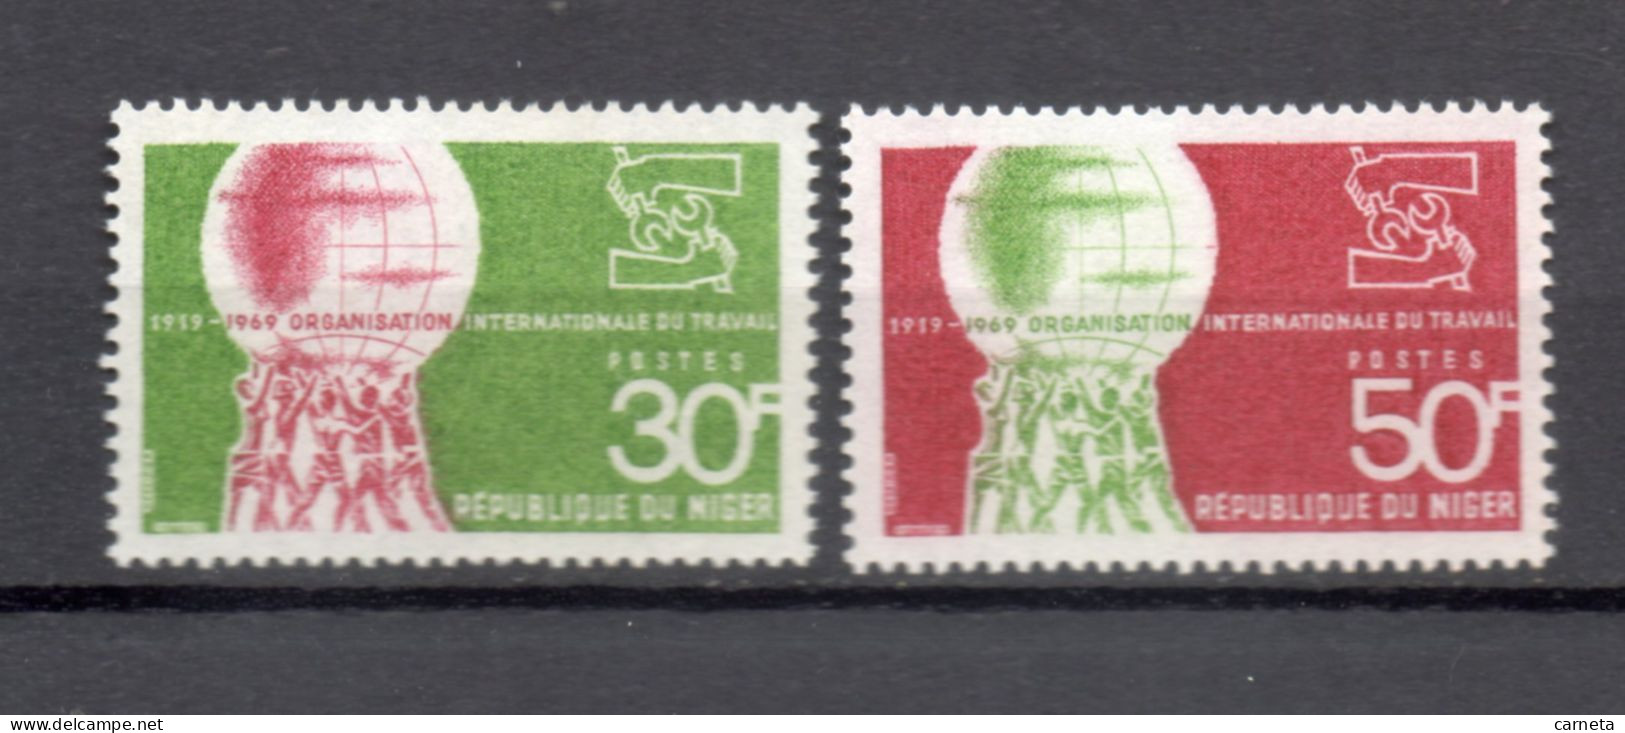 NIGER N° 218 + 219   NEUFS SANS CHARNIERE  COTE 2.00€    TRAVAIL OIT - Niger (1960-...)